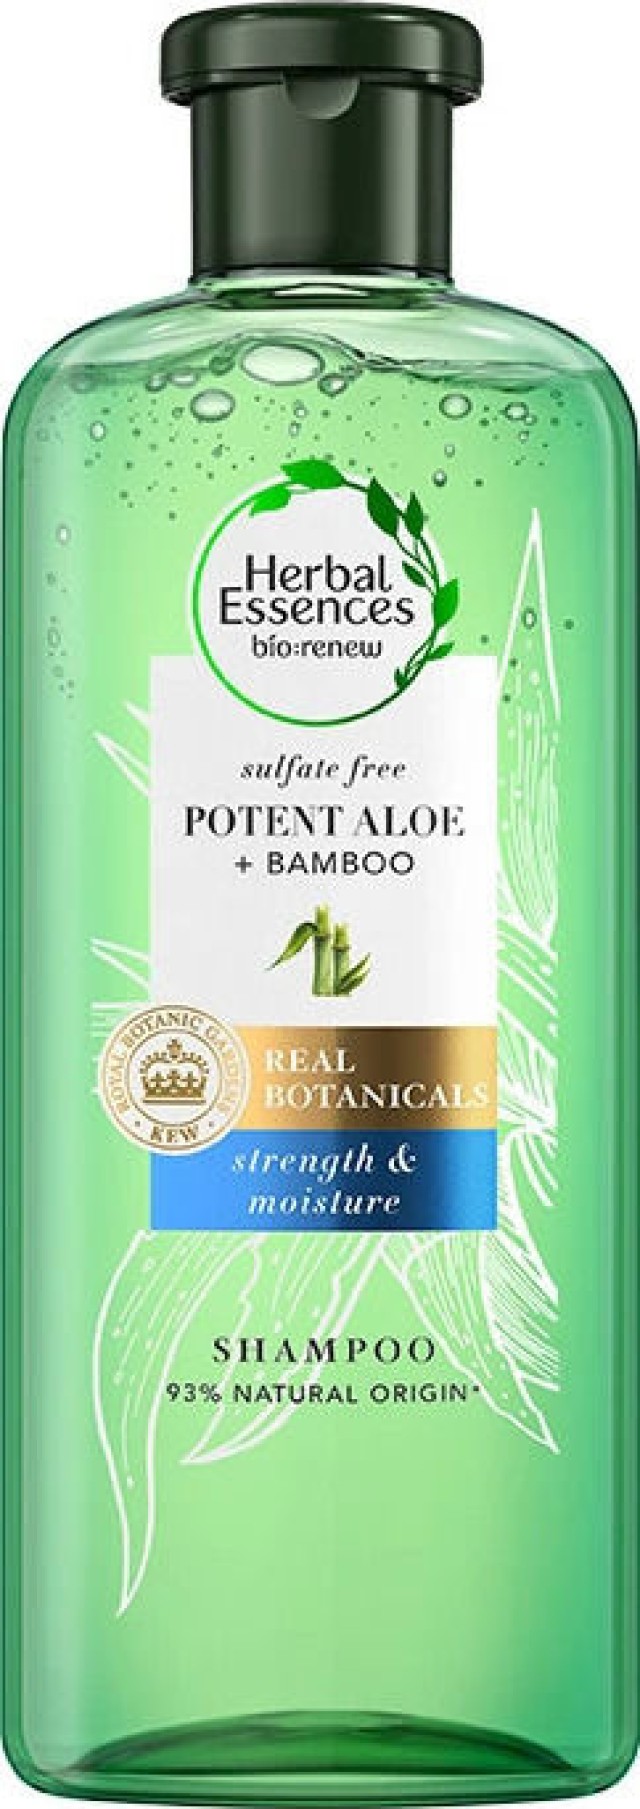 Herbal Essences Pure Potent Aloe + Bamboo Shampoo 380ml